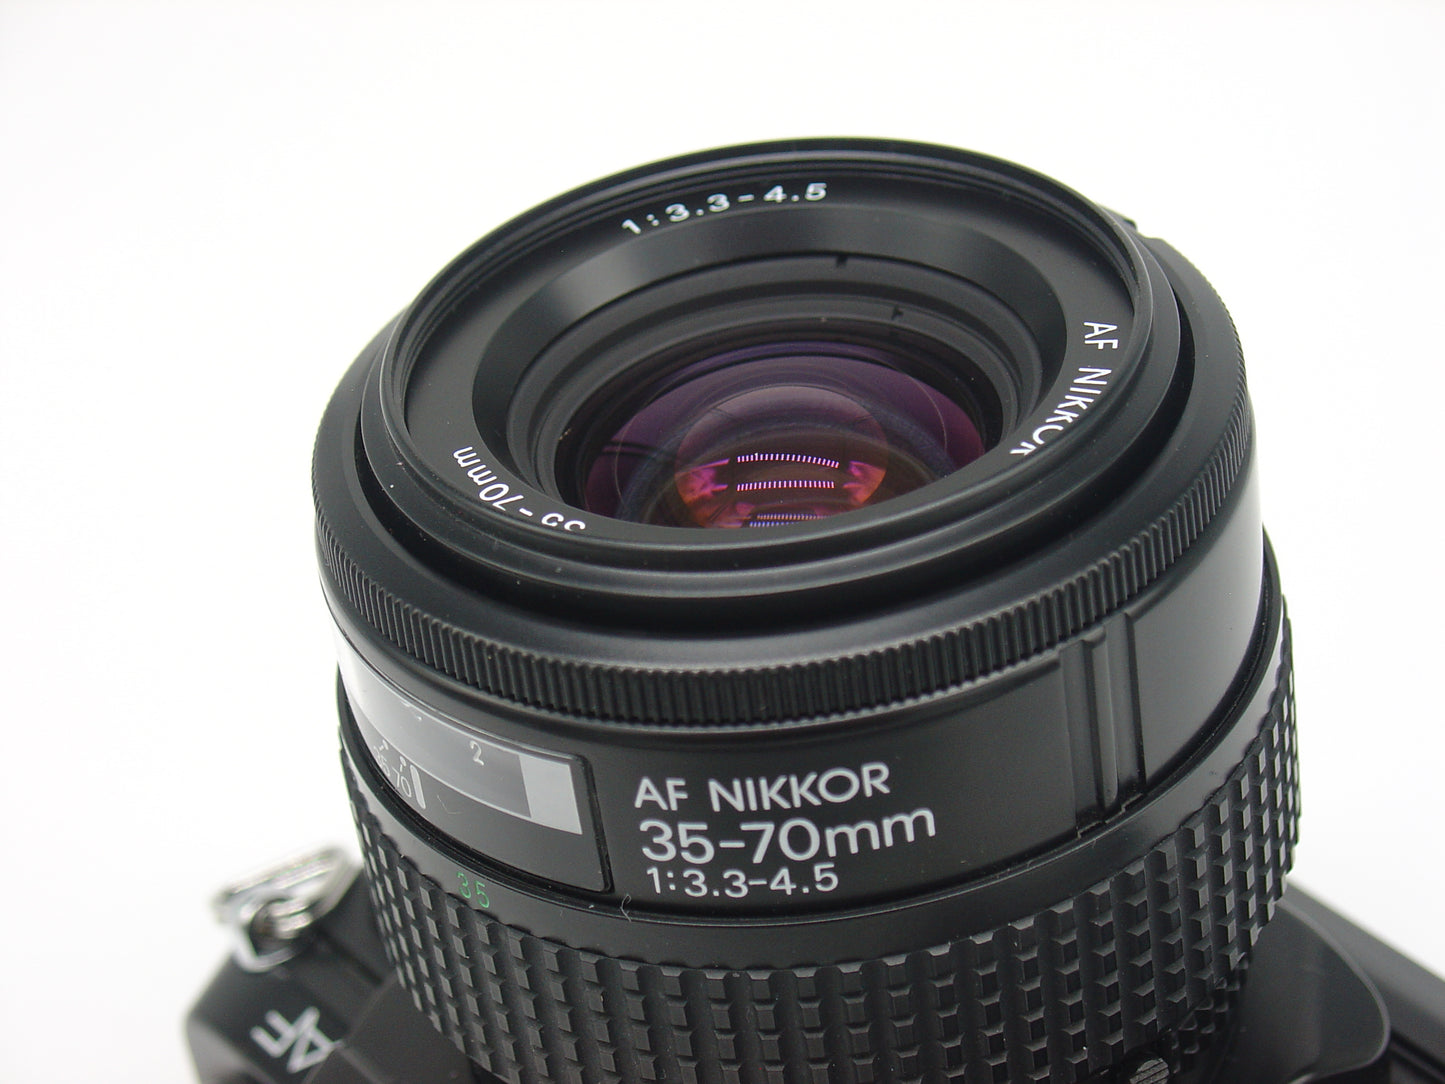 Nikon F-501 SLR film camera with zoom lens